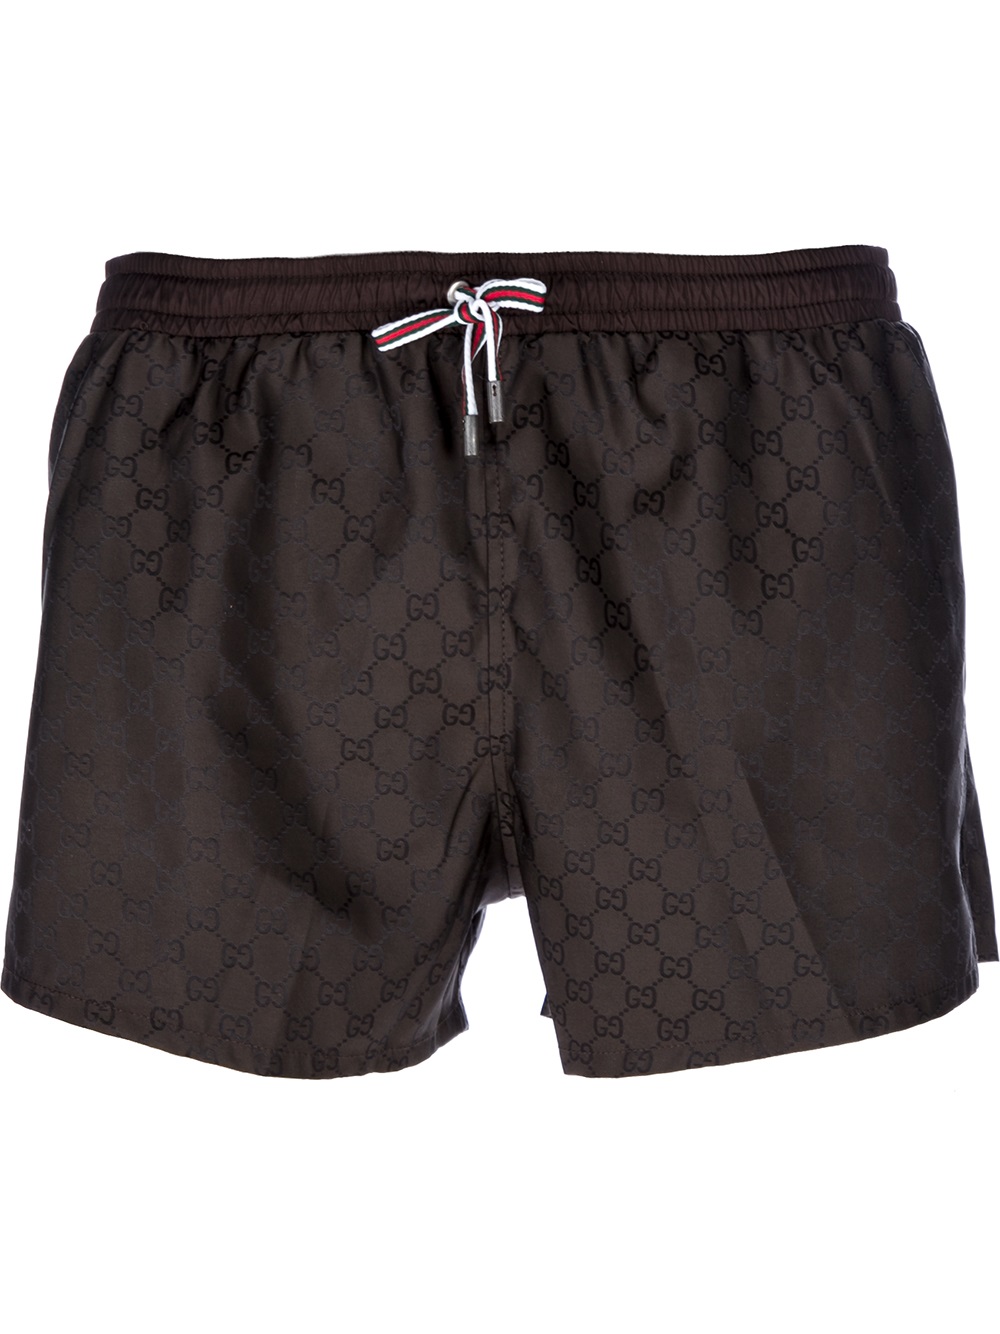 Gucci Monogram Swim Shorts in Brown 